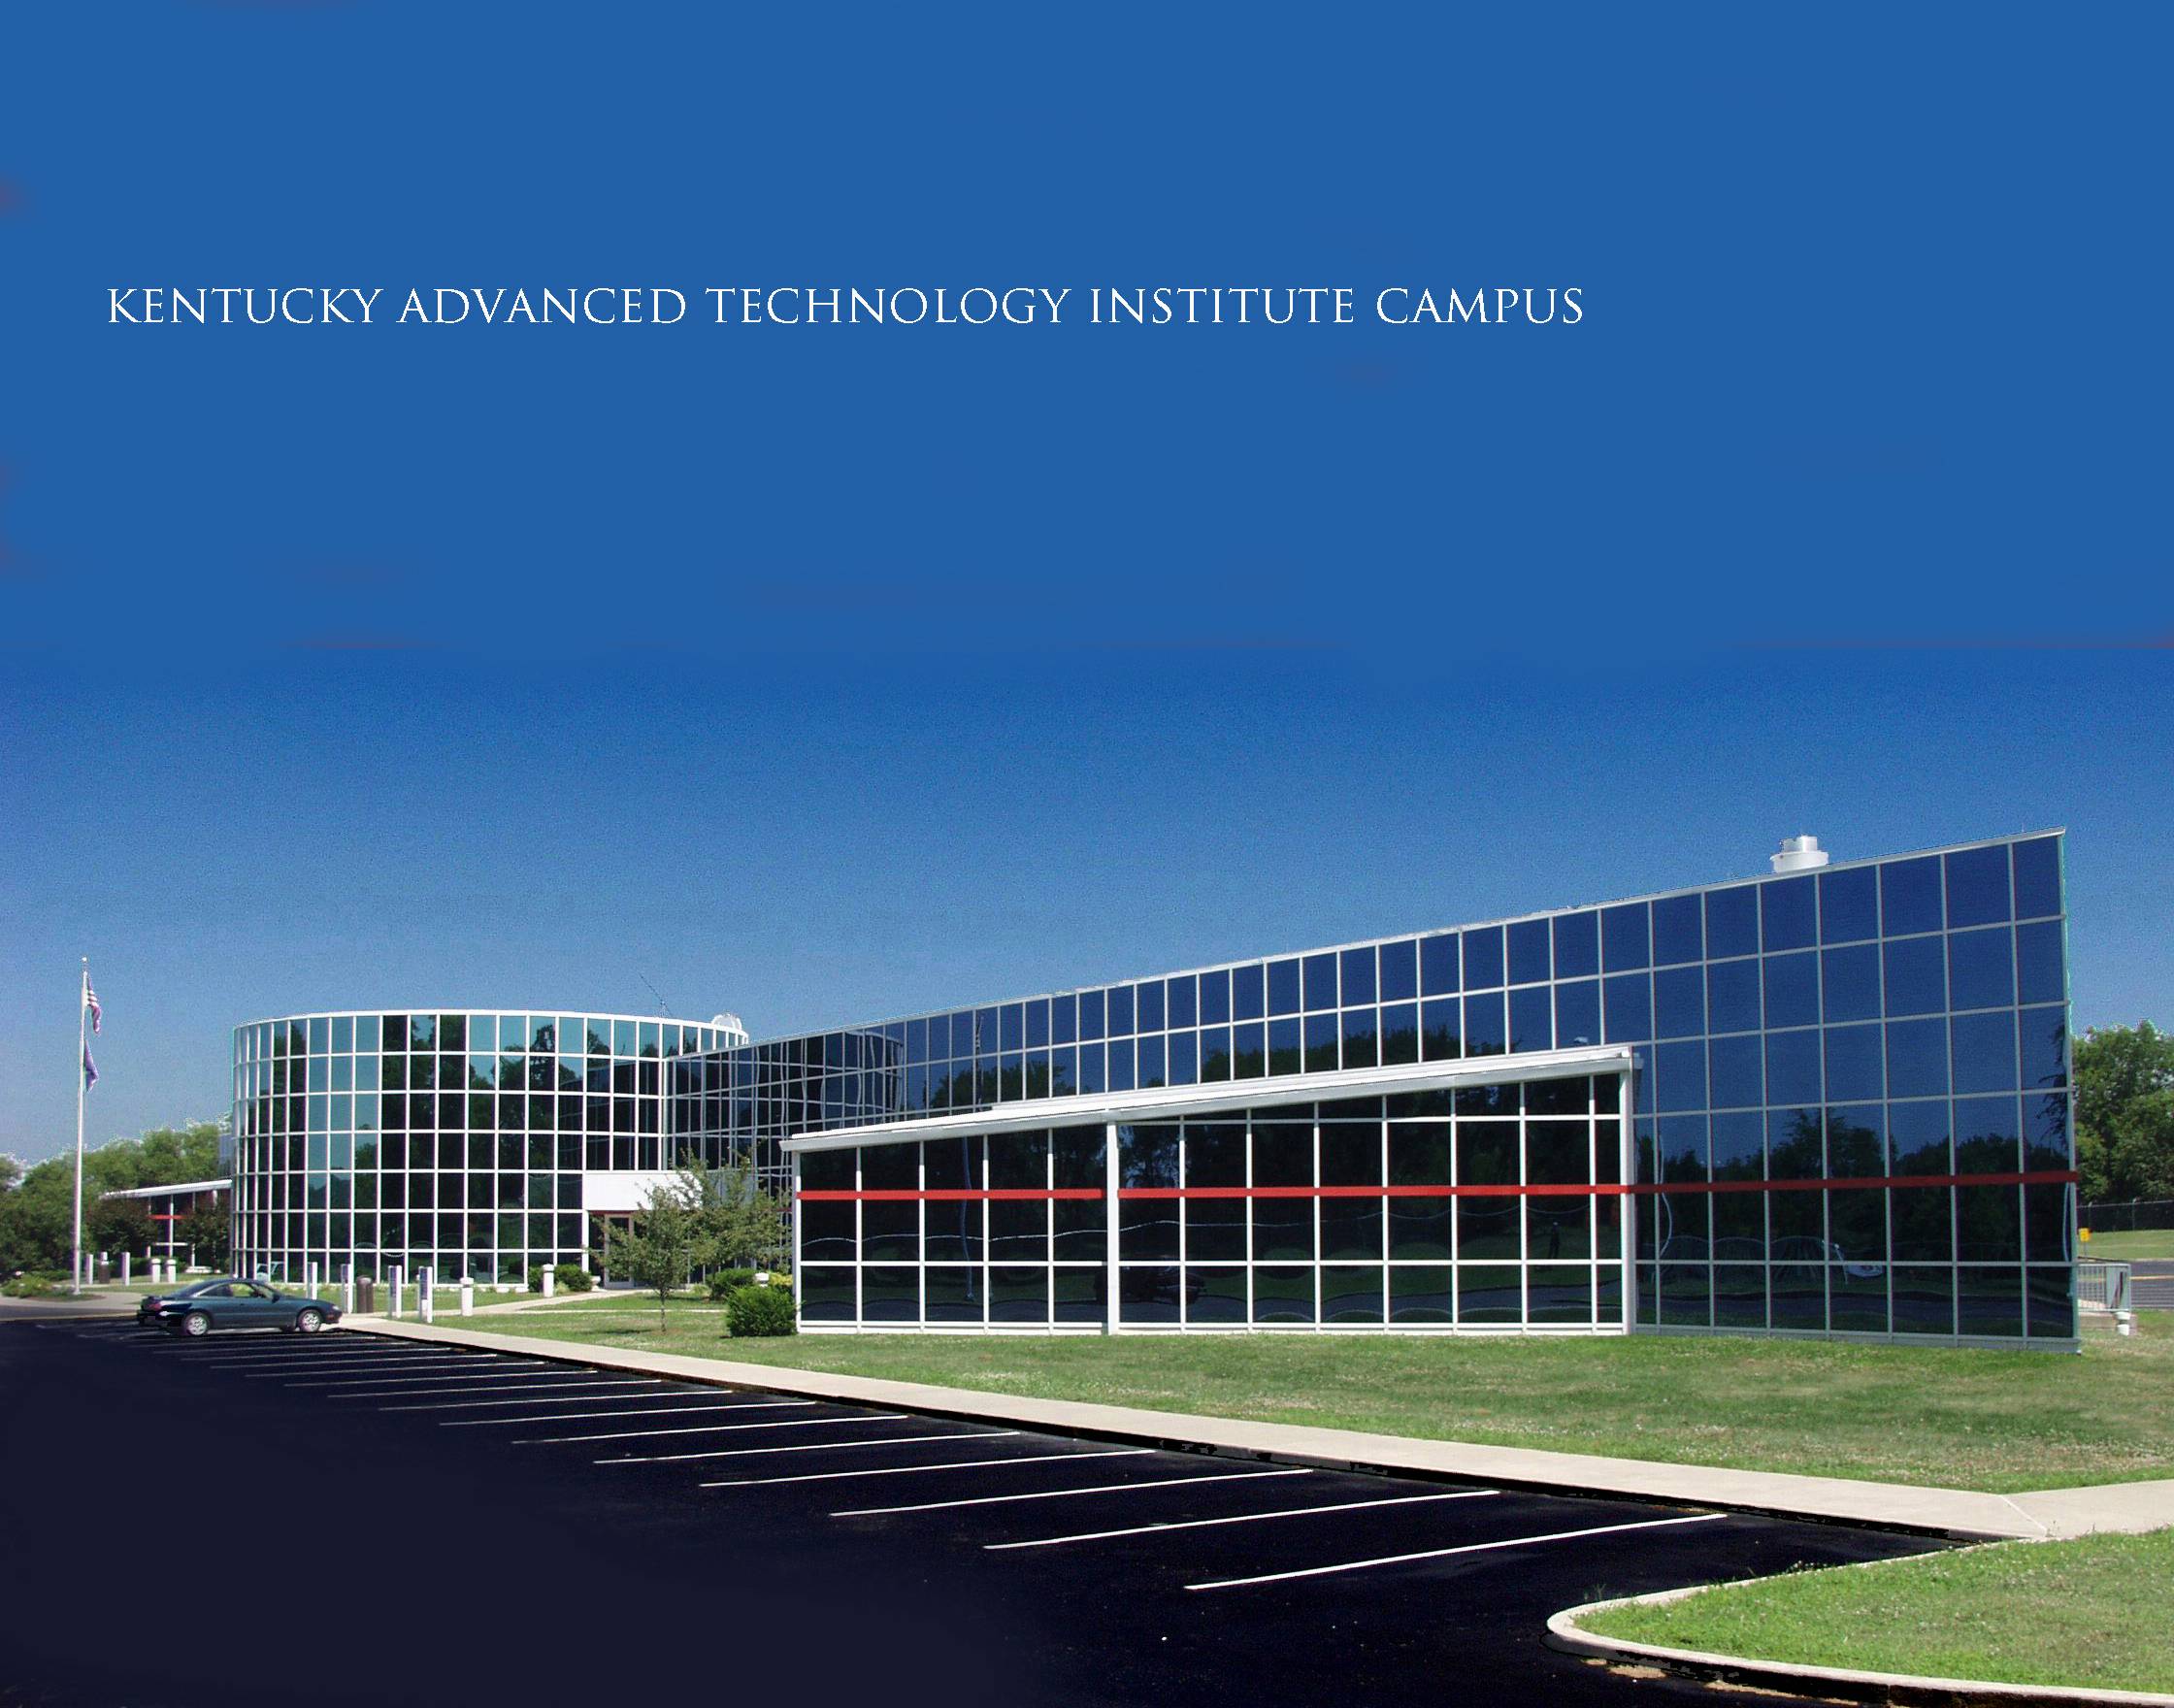 Kentucky Advanced Technology Institute (KATI) Campus